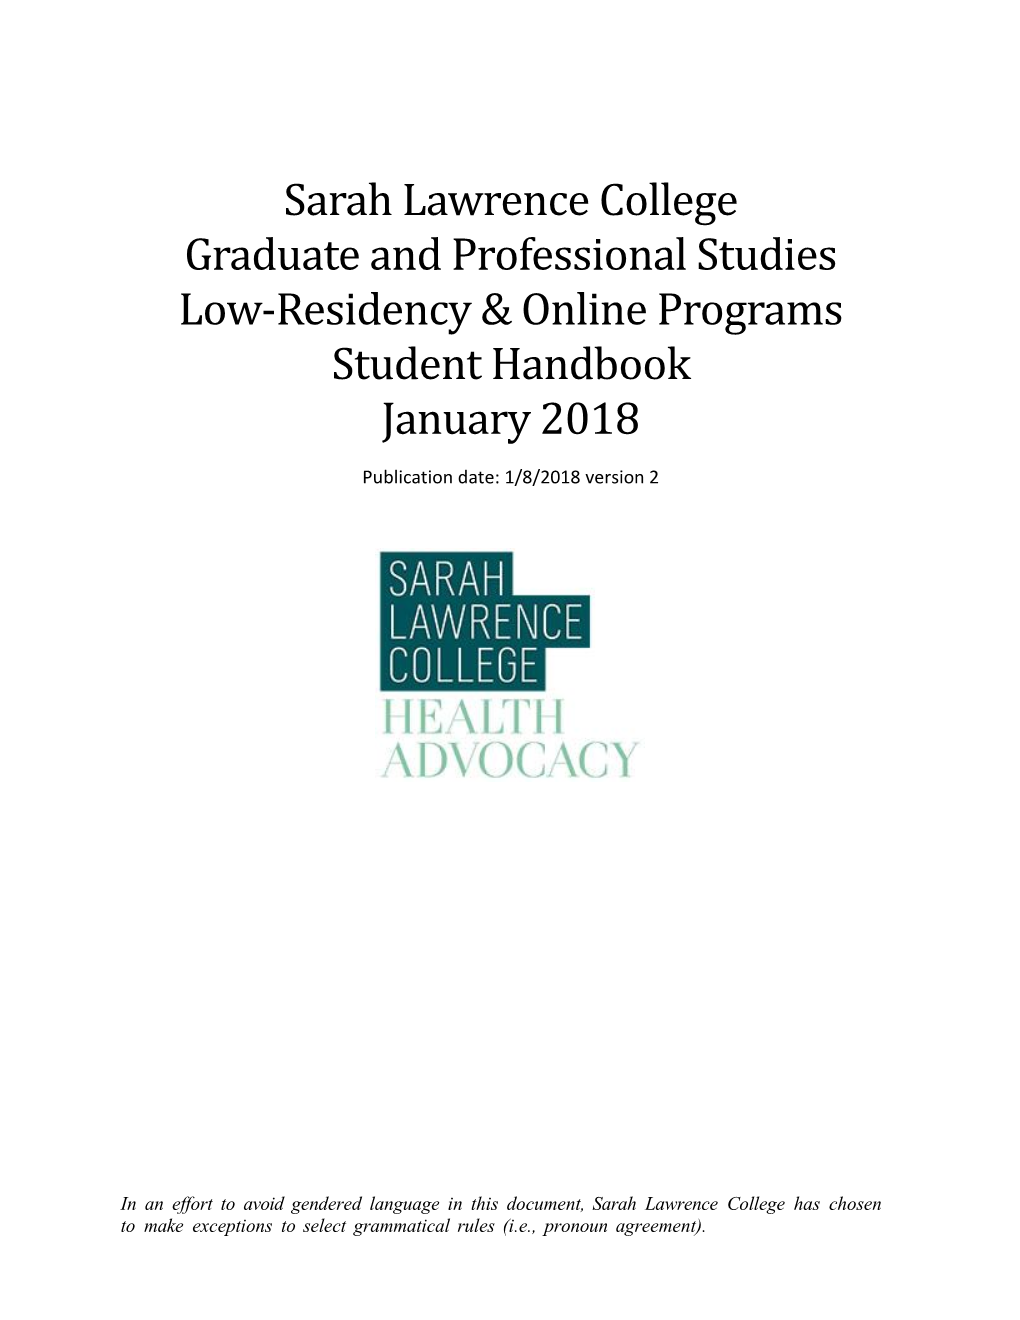 Sarah Lawrence College Graduate and Professional Studies Low-Residency & Online Programs Student Handbook January 2018